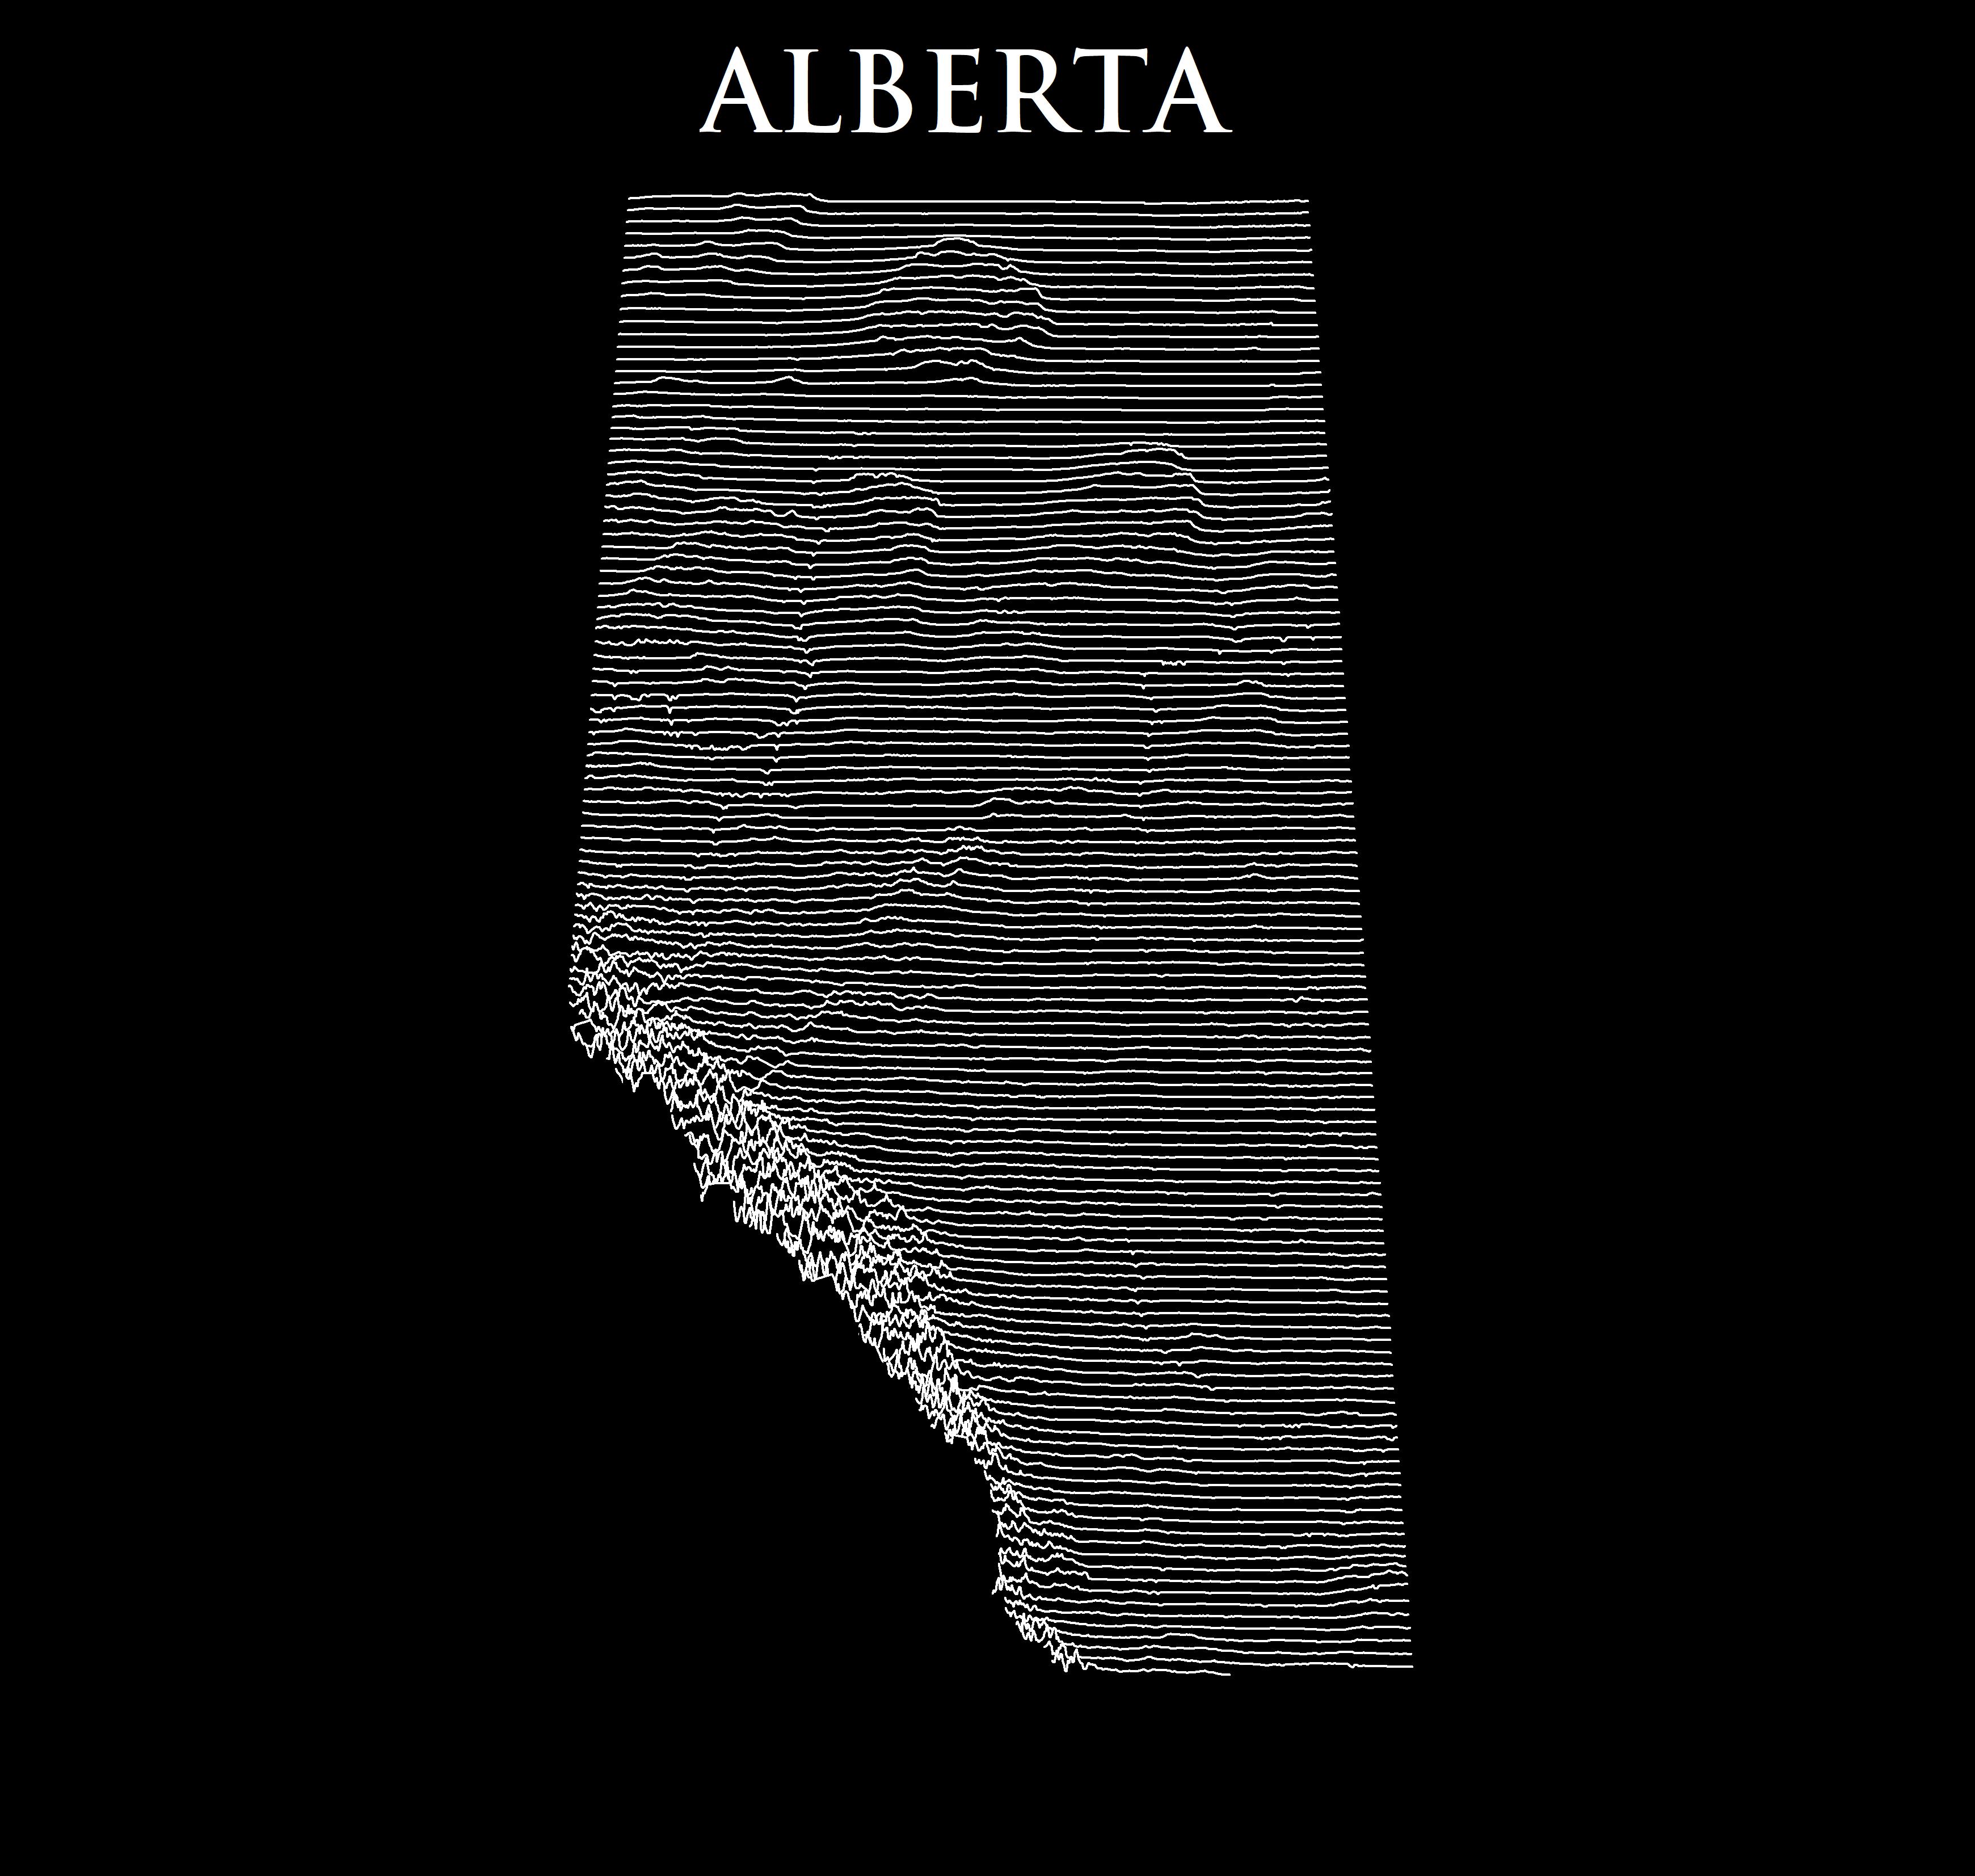 Alberta - Unknown Pleasures